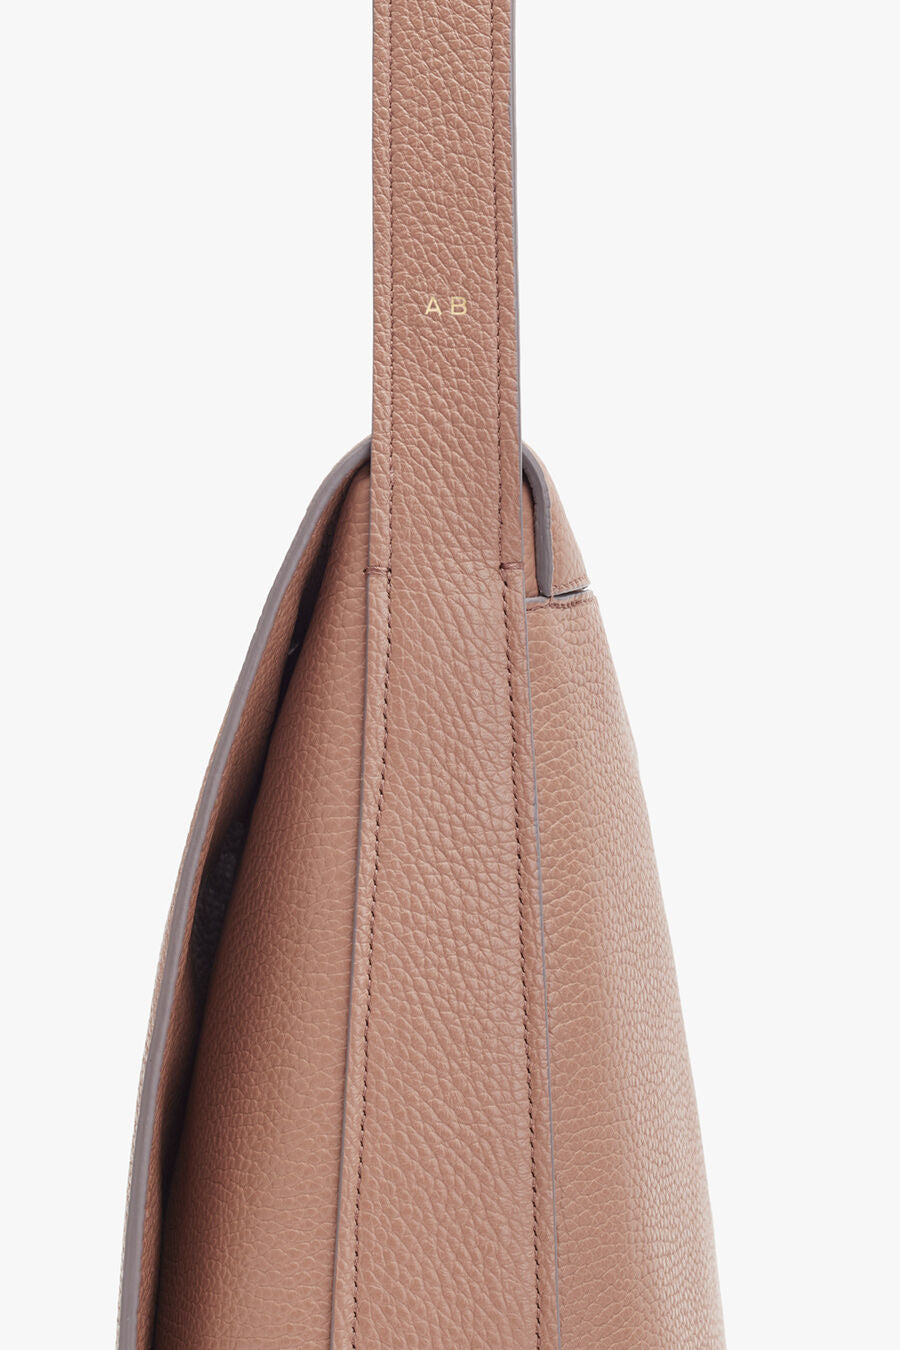 Cuyana - Fall 2020 - Messenger Bag 13-inch